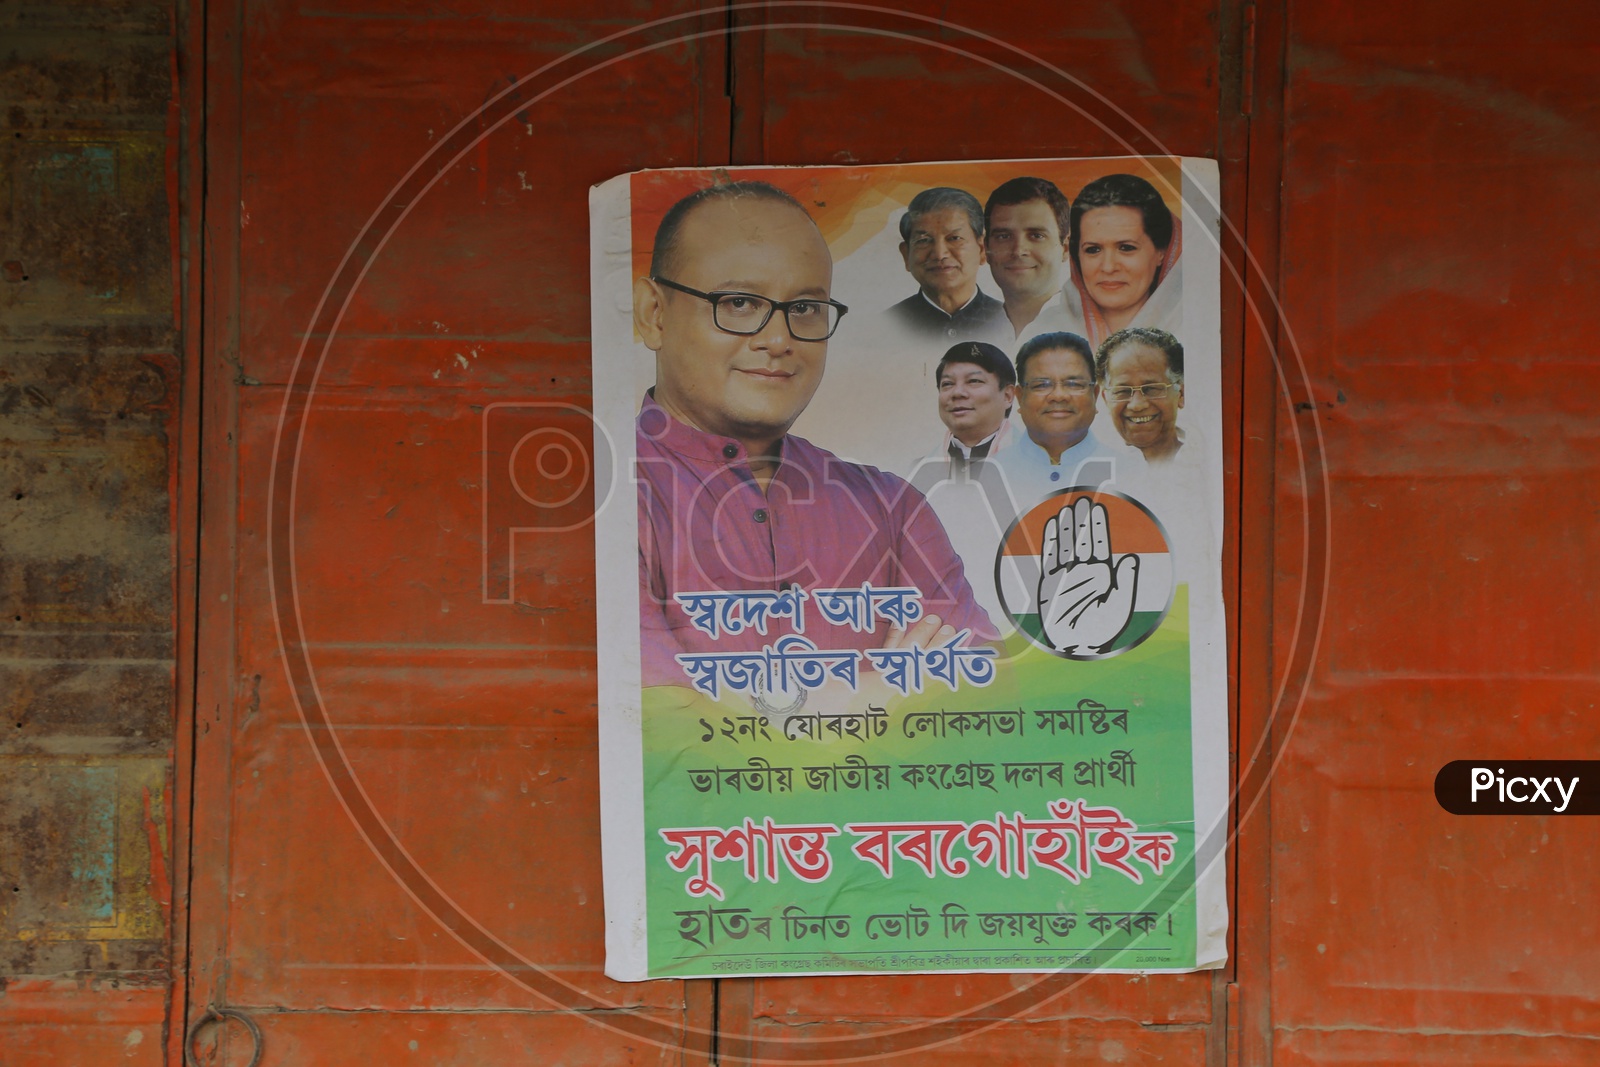 Political poster in Assam